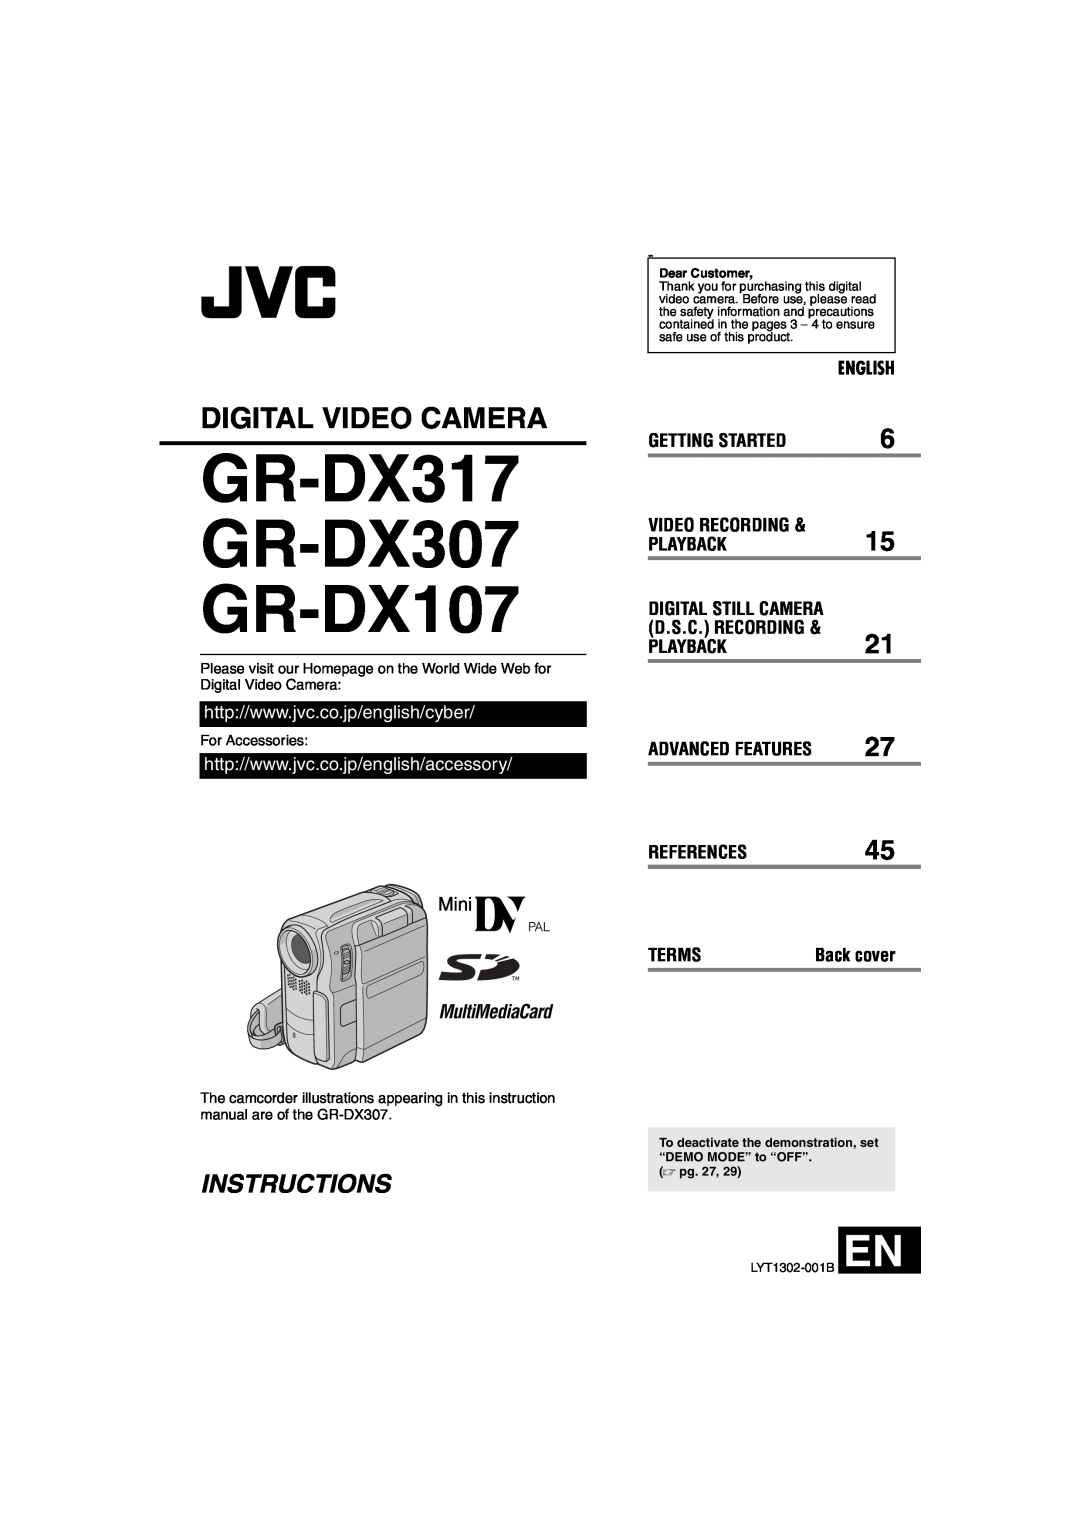 JVC GR-DX307 instruction manual English, Getting Started, VIDEO RECORDING PLAYBACK15 DIGITAL STILL CAMERA D.S.C. RECORDING 